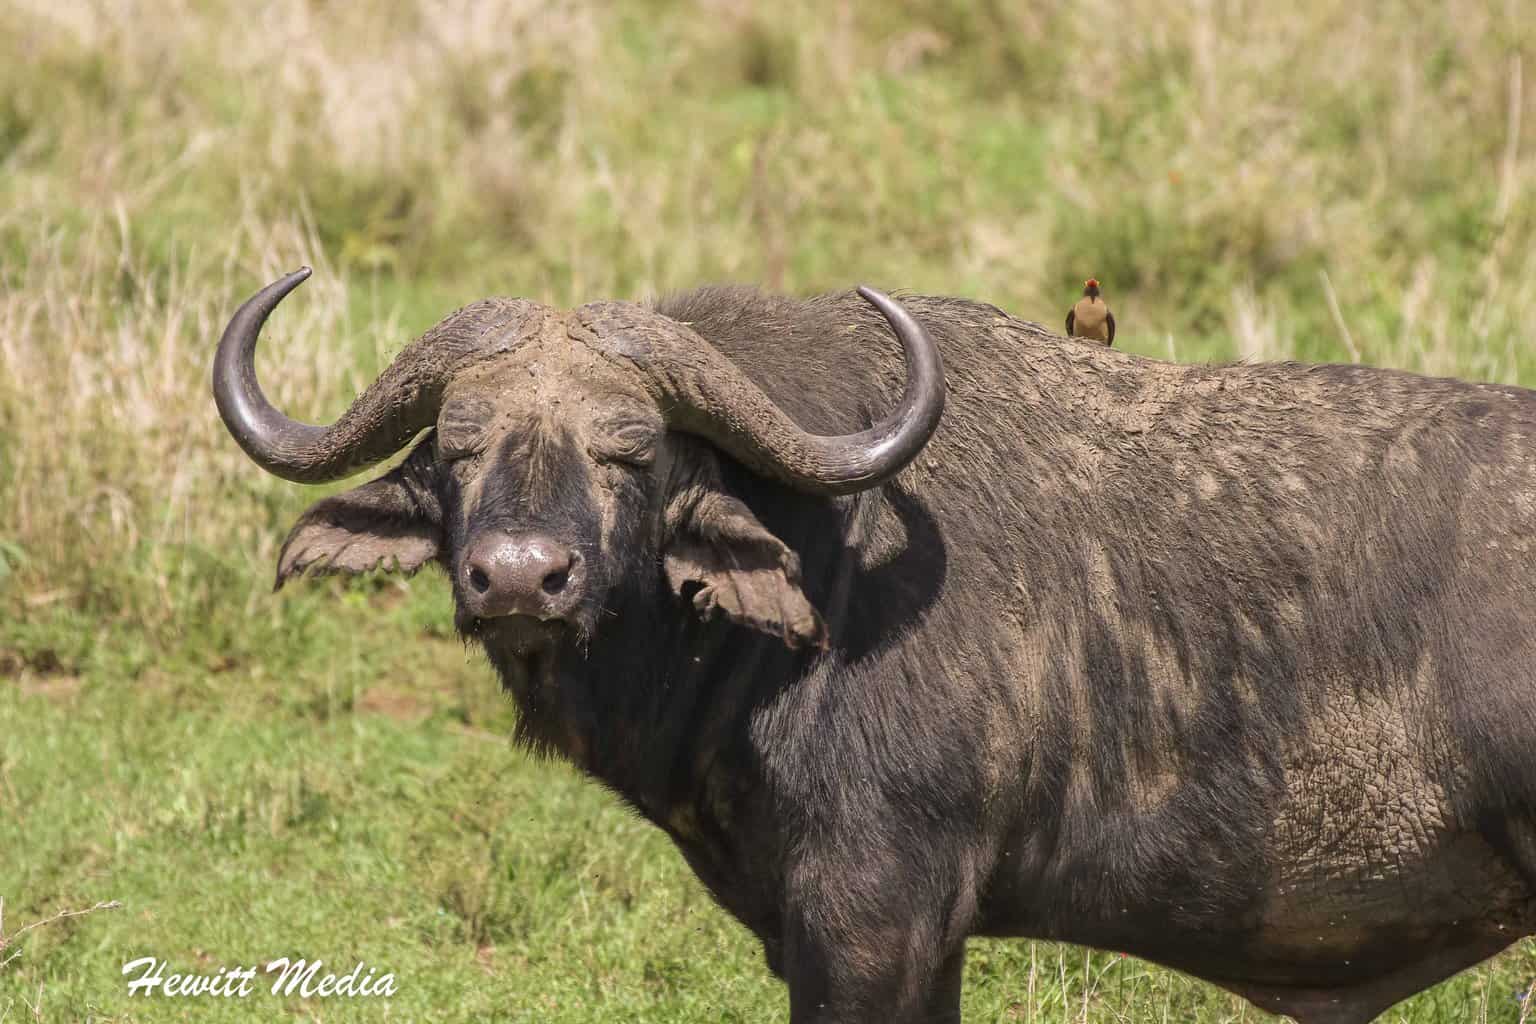 Cape Buffalo and the Ox Pecker